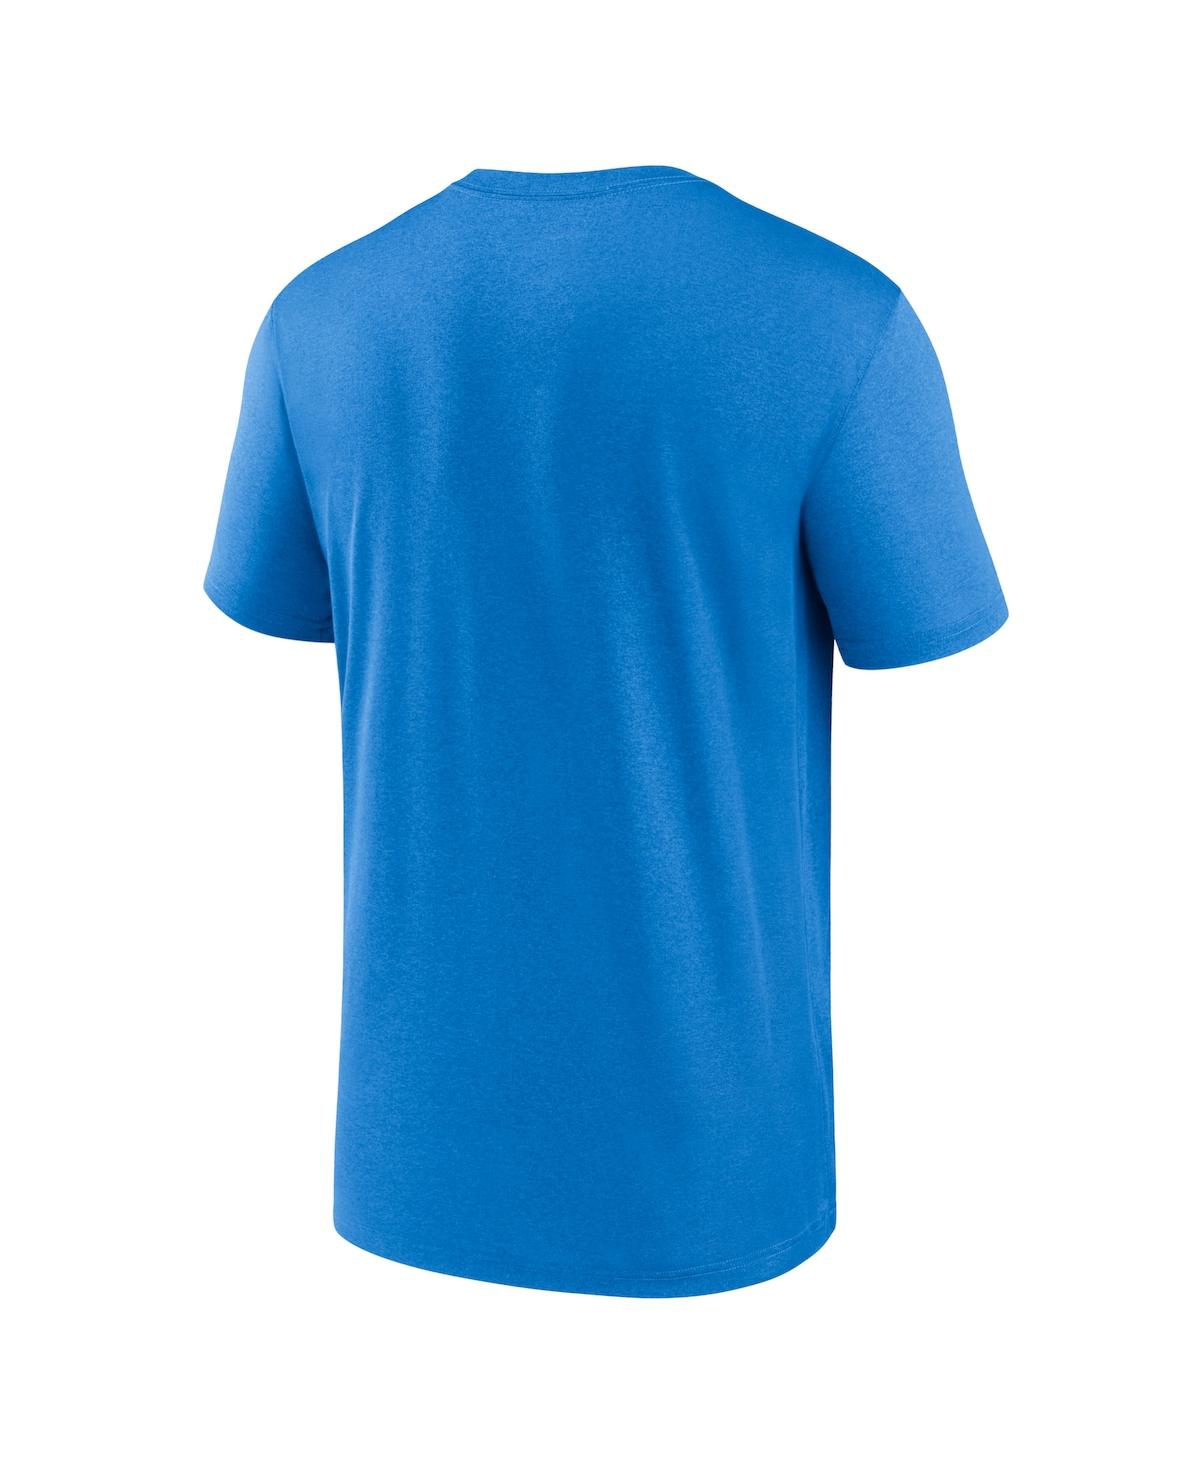 Shop Nike Men's  Powder Blue Los Angeles Chargers Legend Logo Performance T-shirt